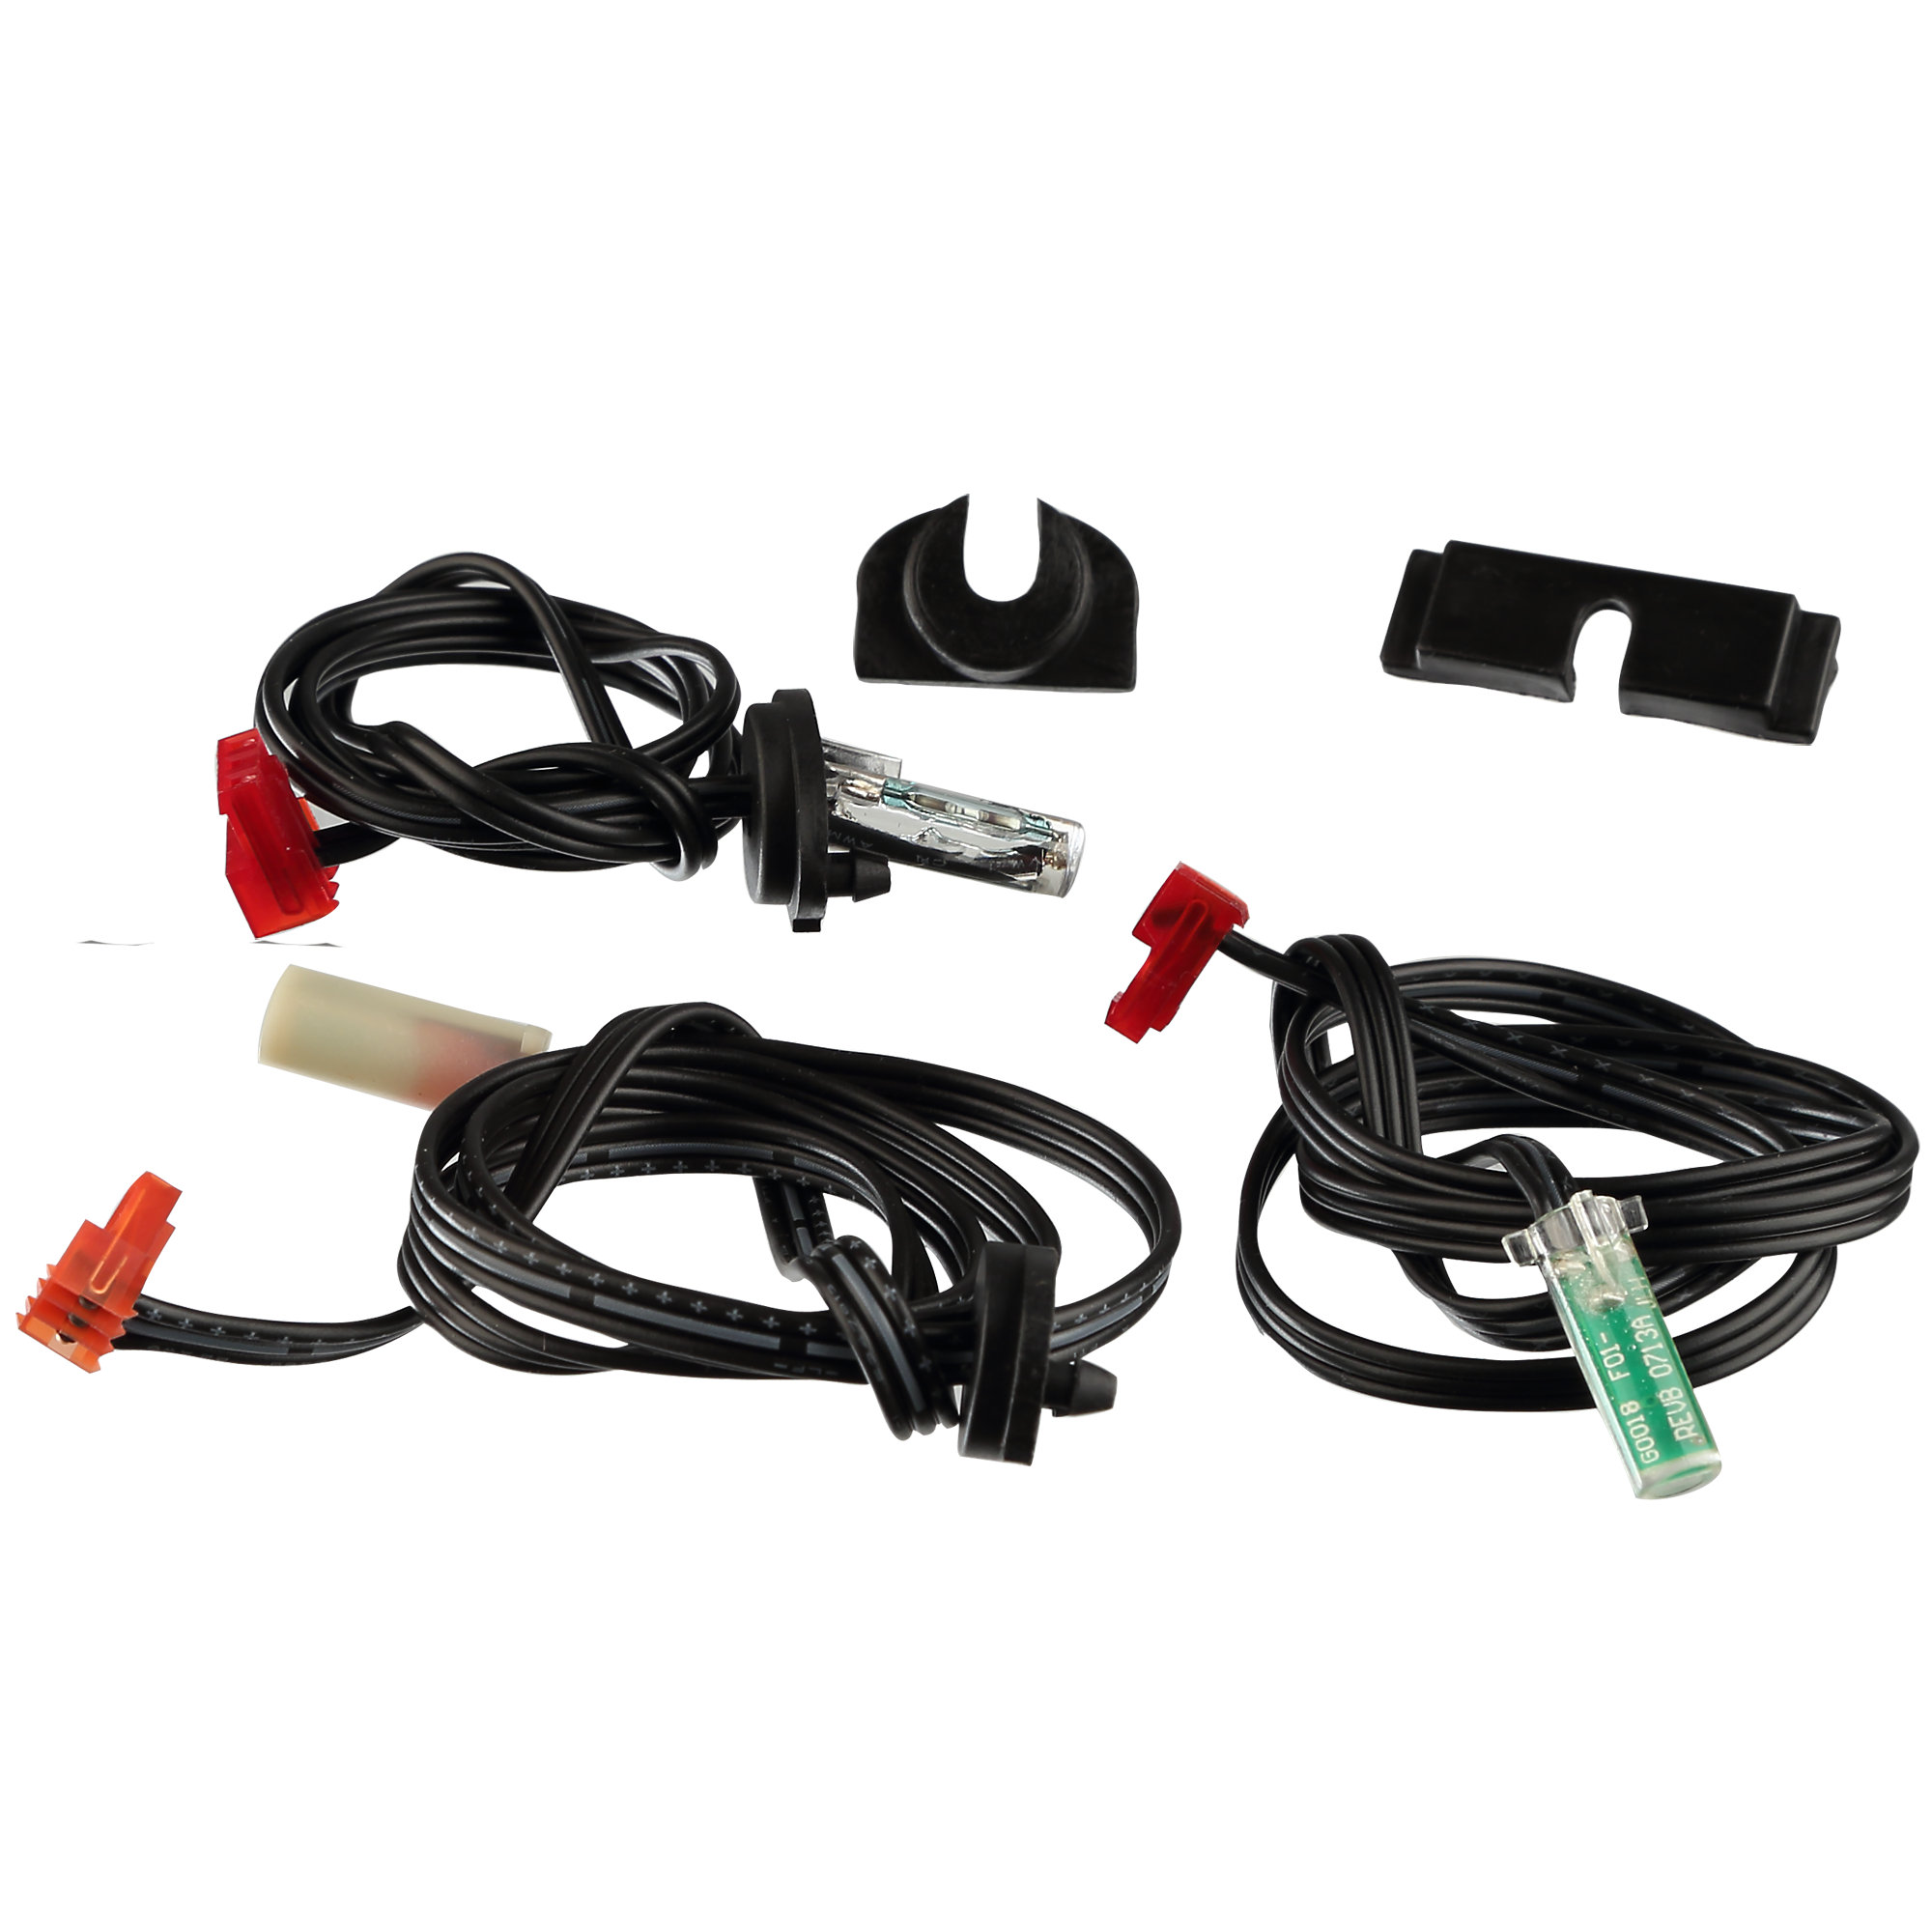 Incline Sensor Wire Kit